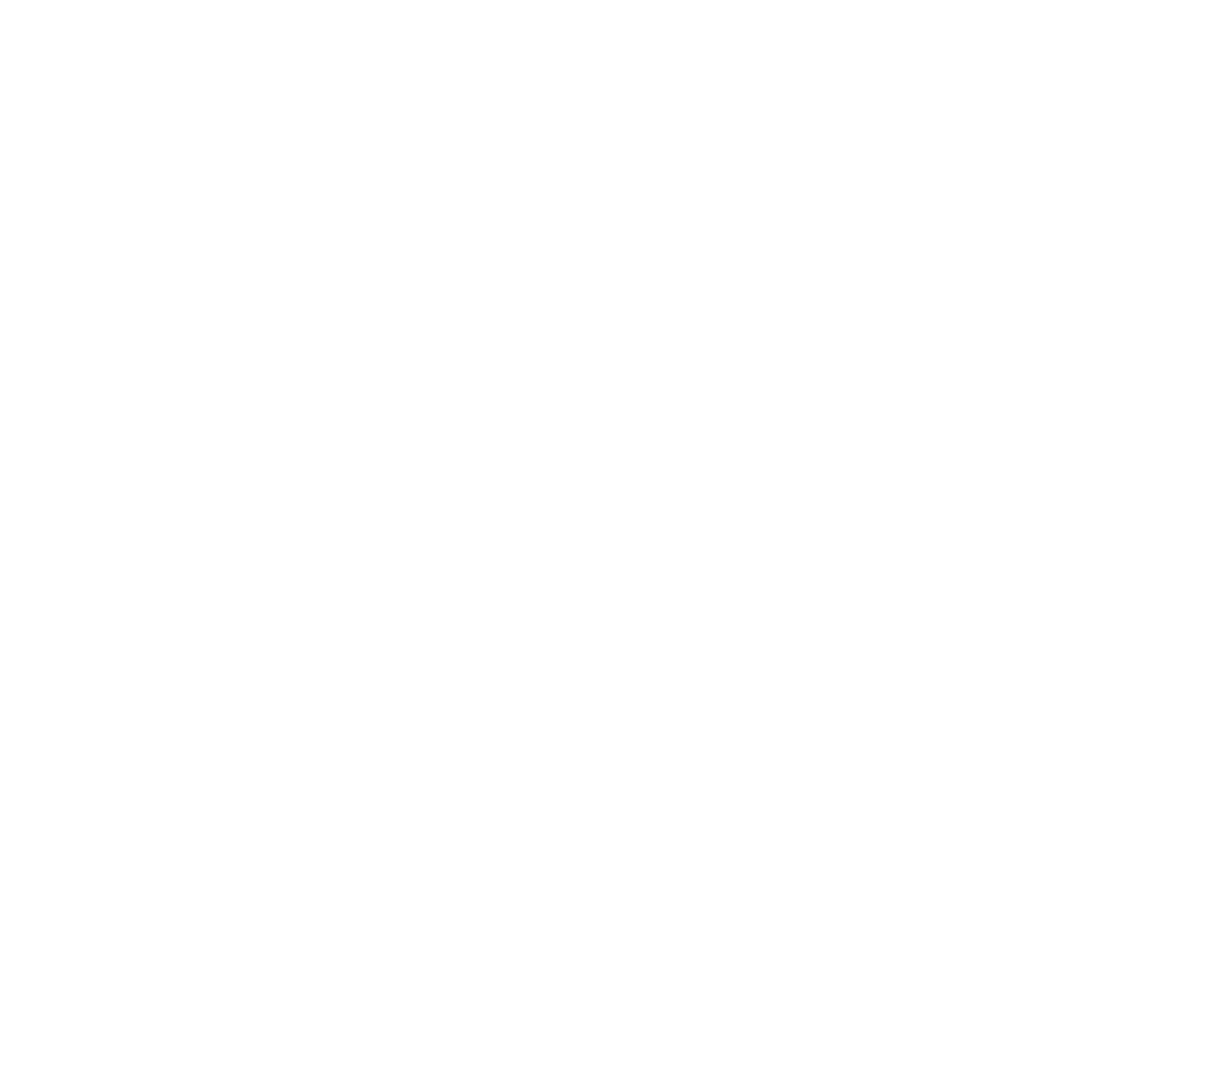 Aadi Bioscience logo for dark backgrounds (transparent PNG)